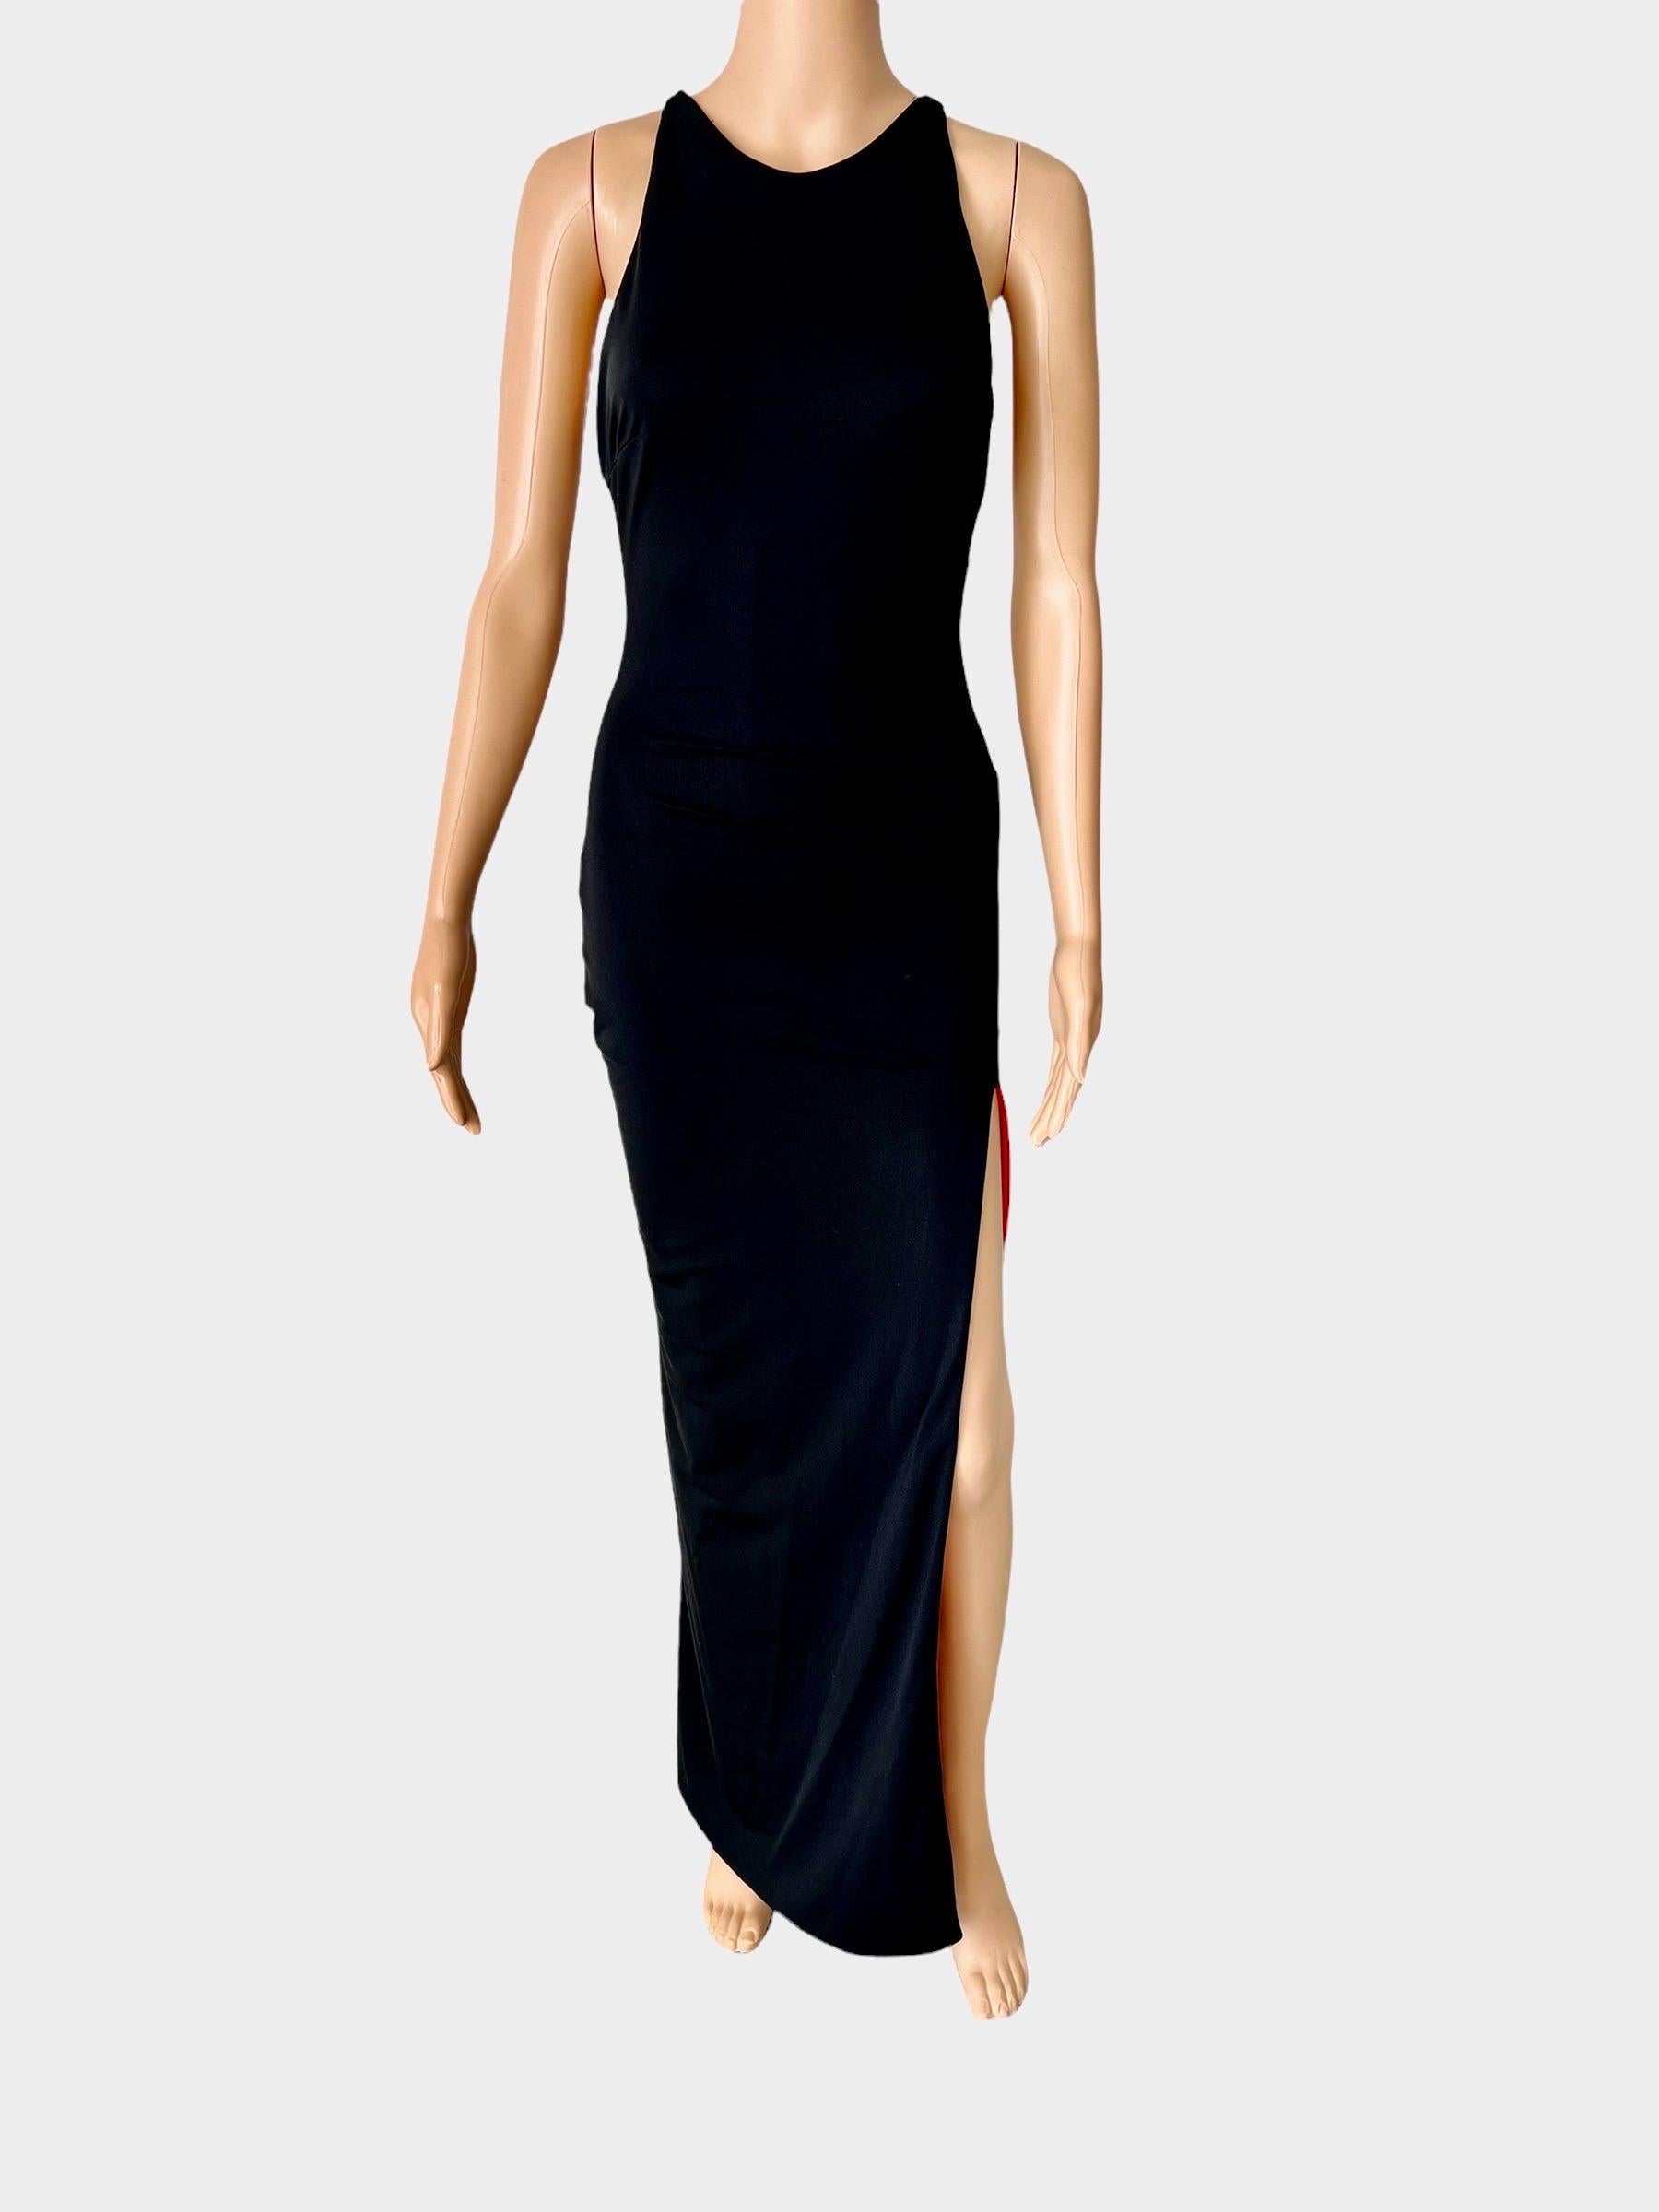 Gianni Versace S/S 1998 Runway Vintage Wet Liquid Look Cutout Evening Dress Gown For Sale 1